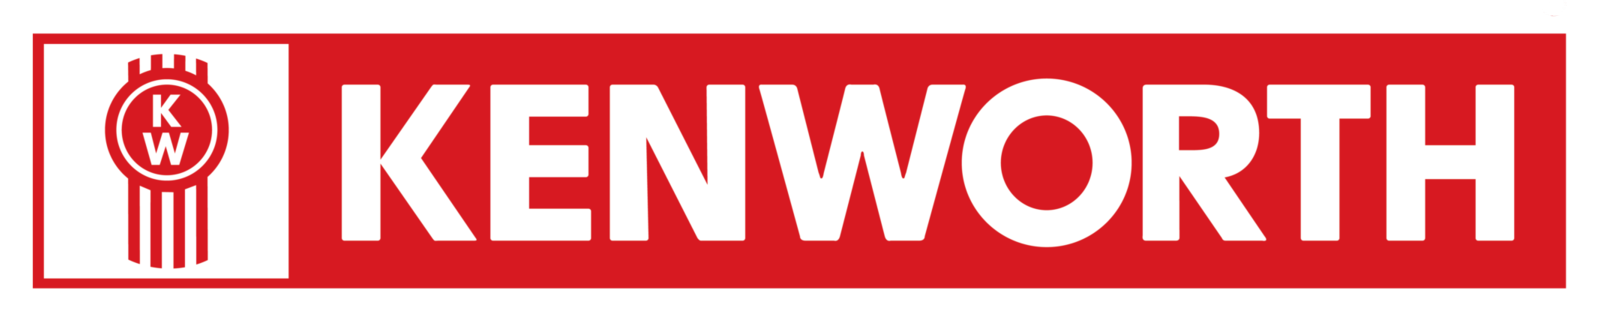 kenworth trucks logo